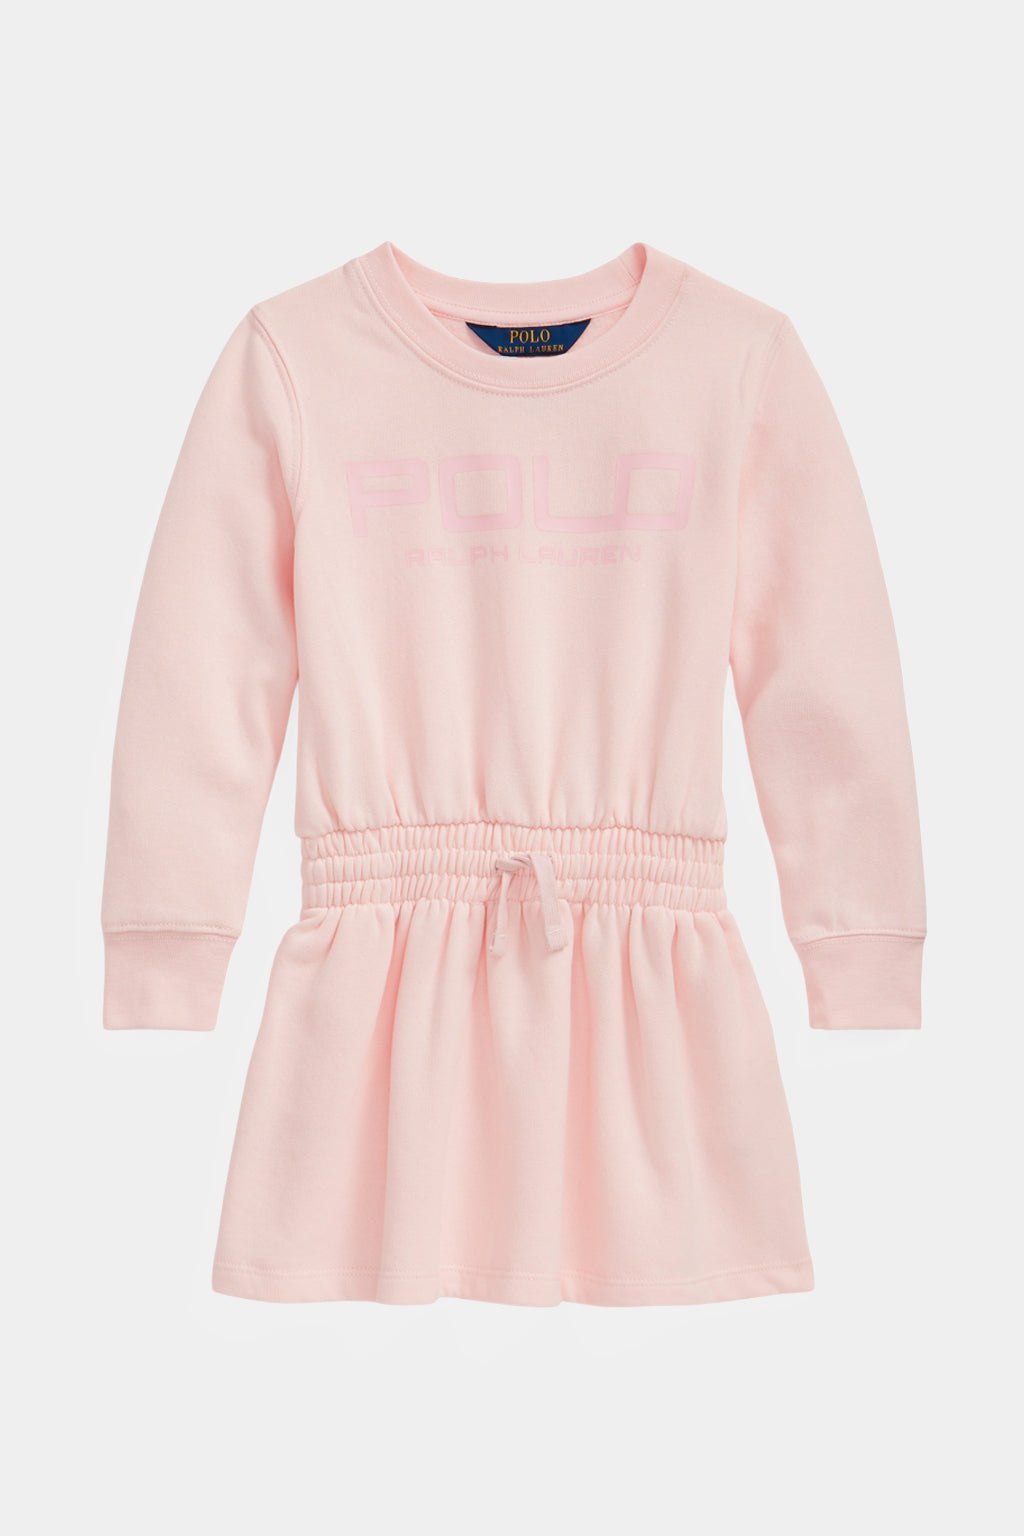 Polo Ralph Lauren - Little Girl's Logo Fleece Fit-&-Flare Dress